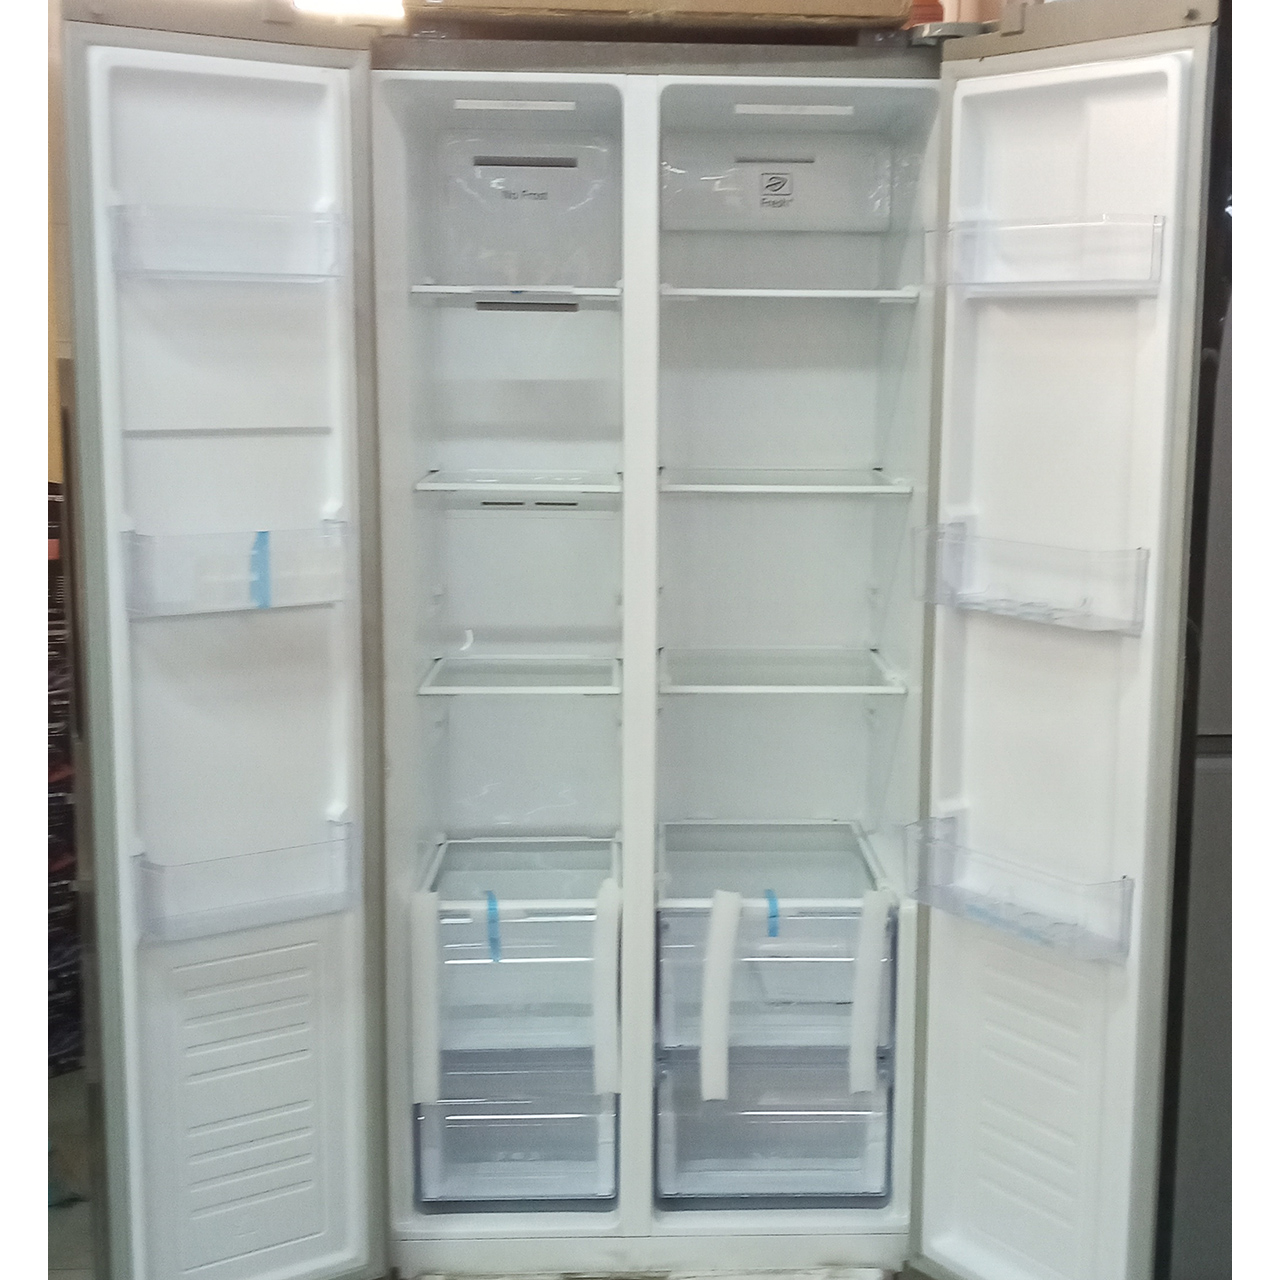 Холодильник side-by-side Avest 436 литров